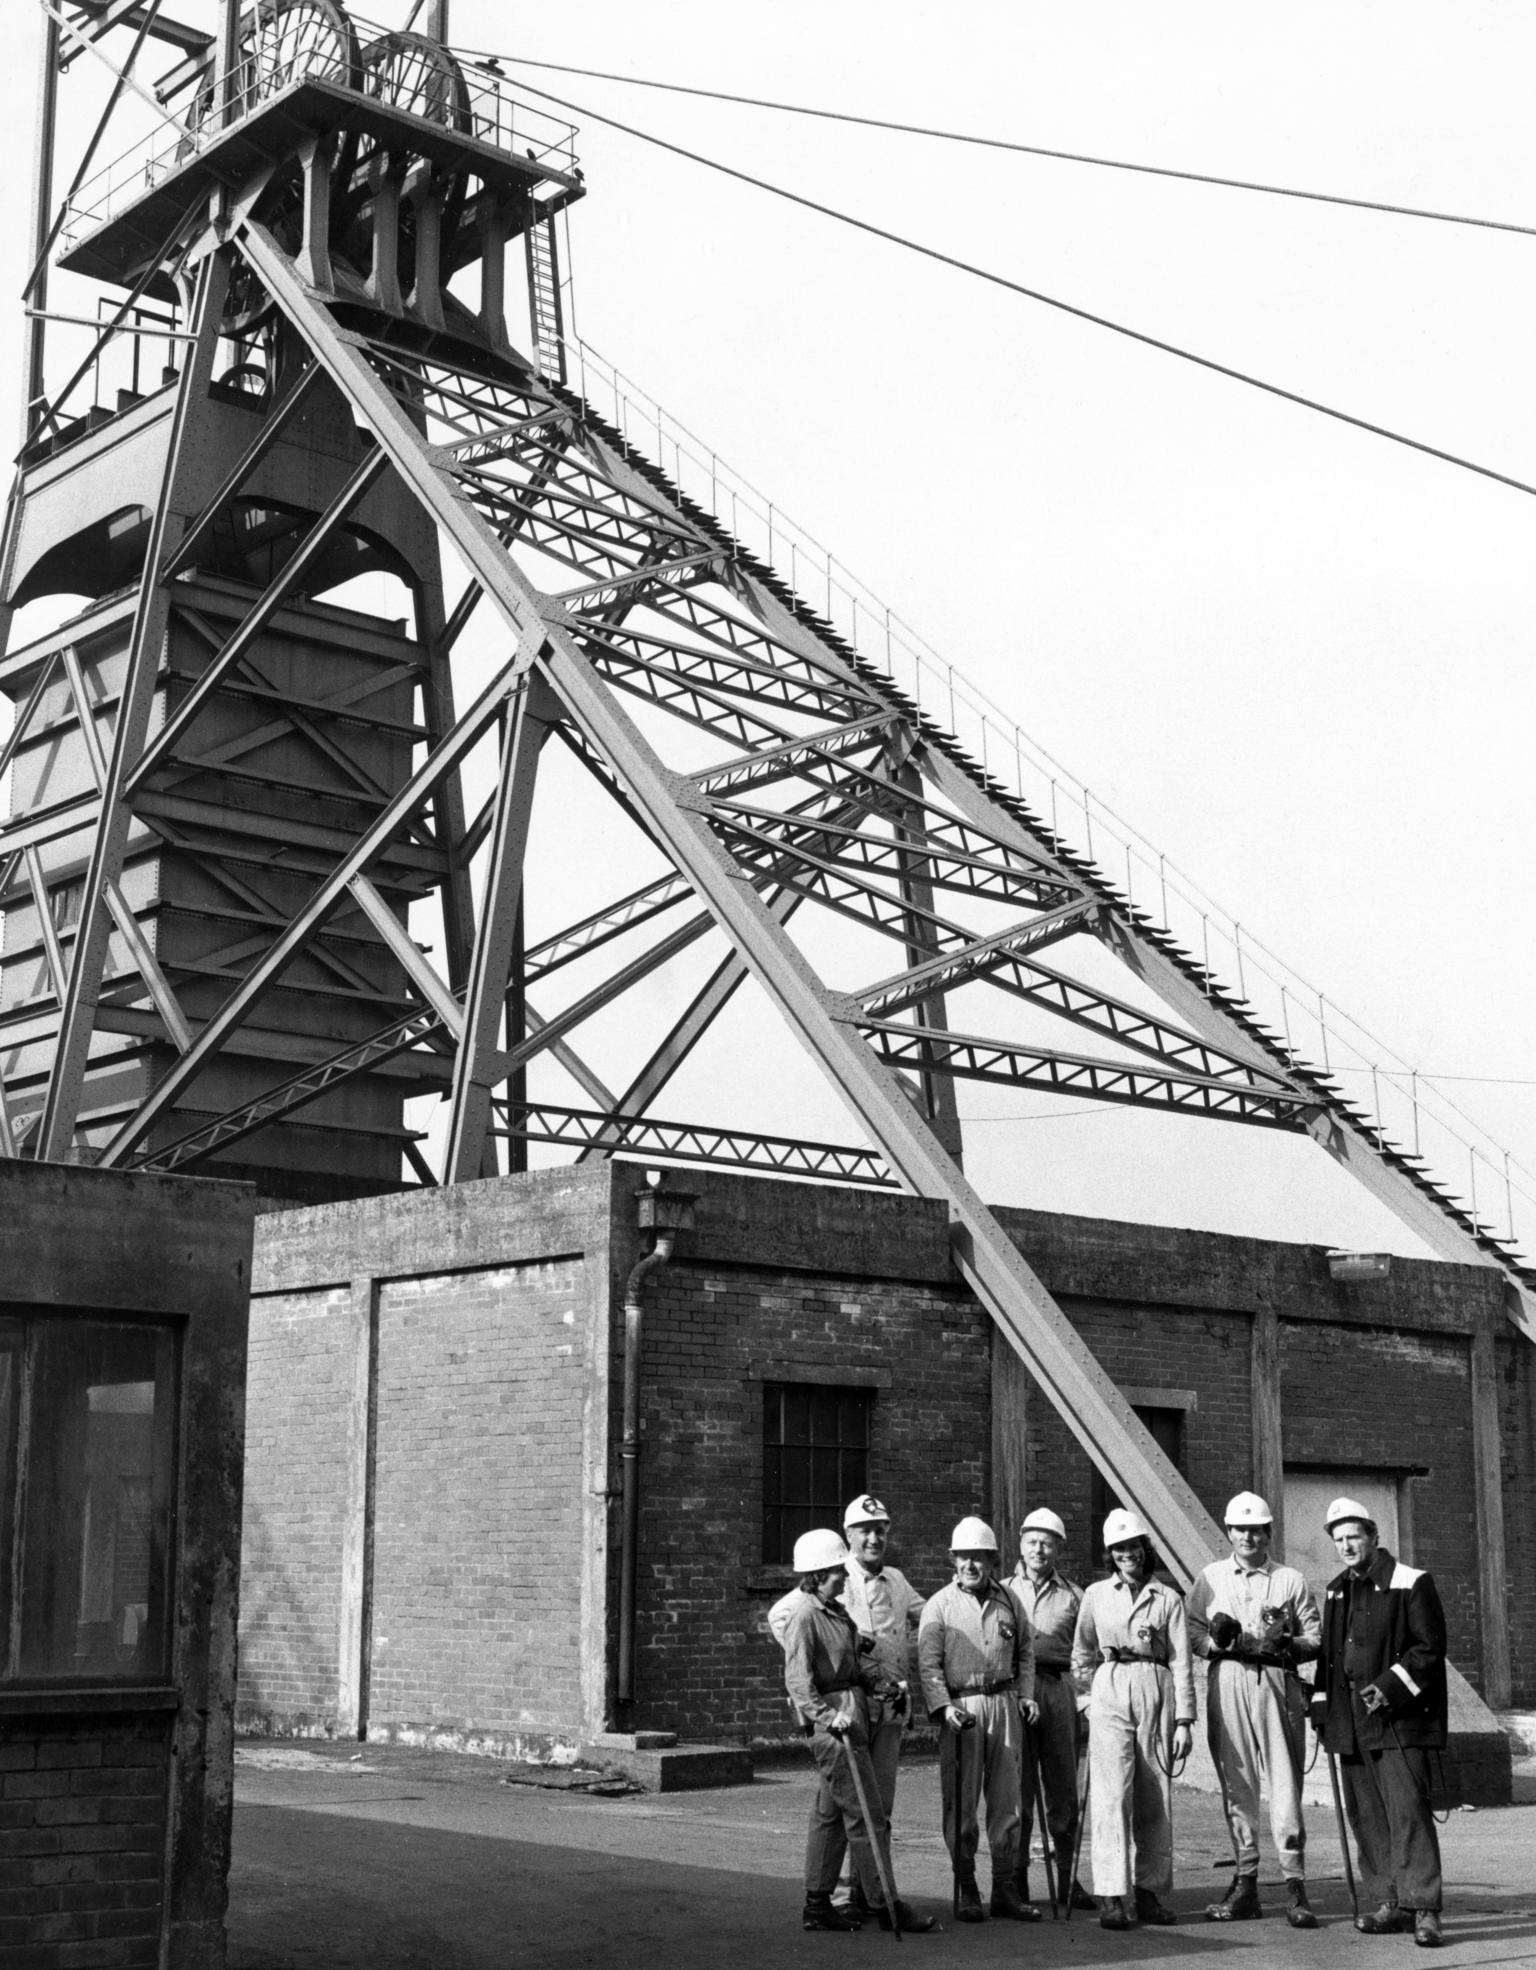 Nantgarw Colliery, photograph